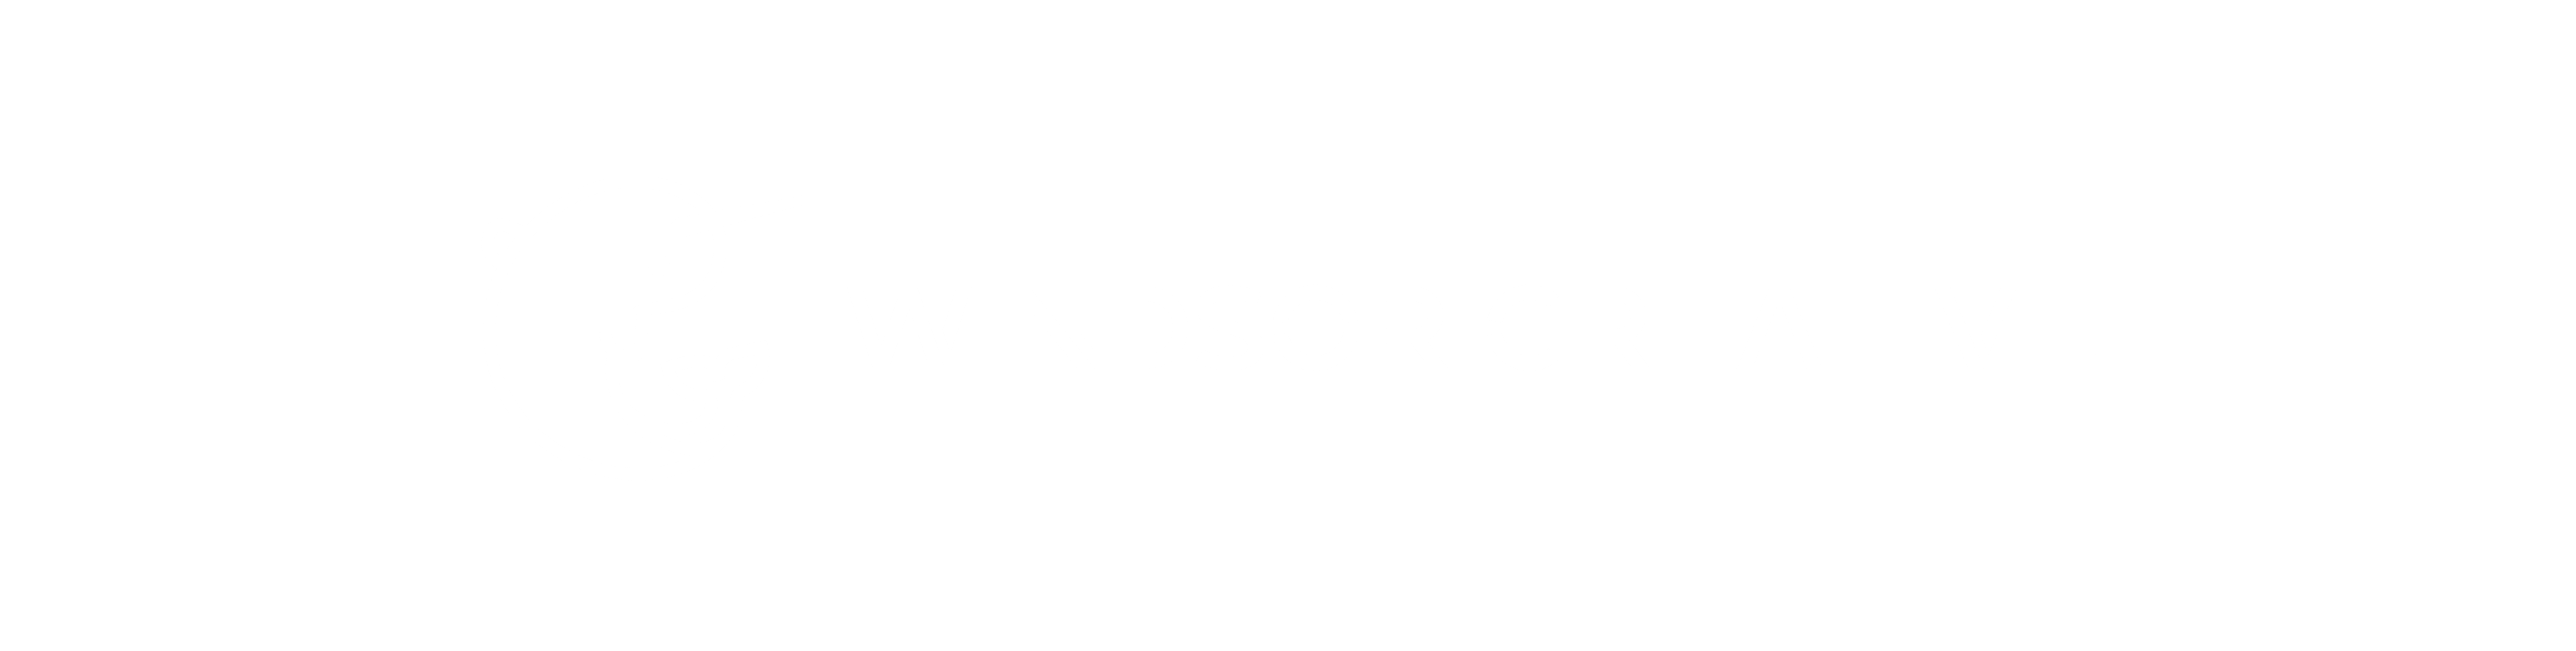 Windsor Creative